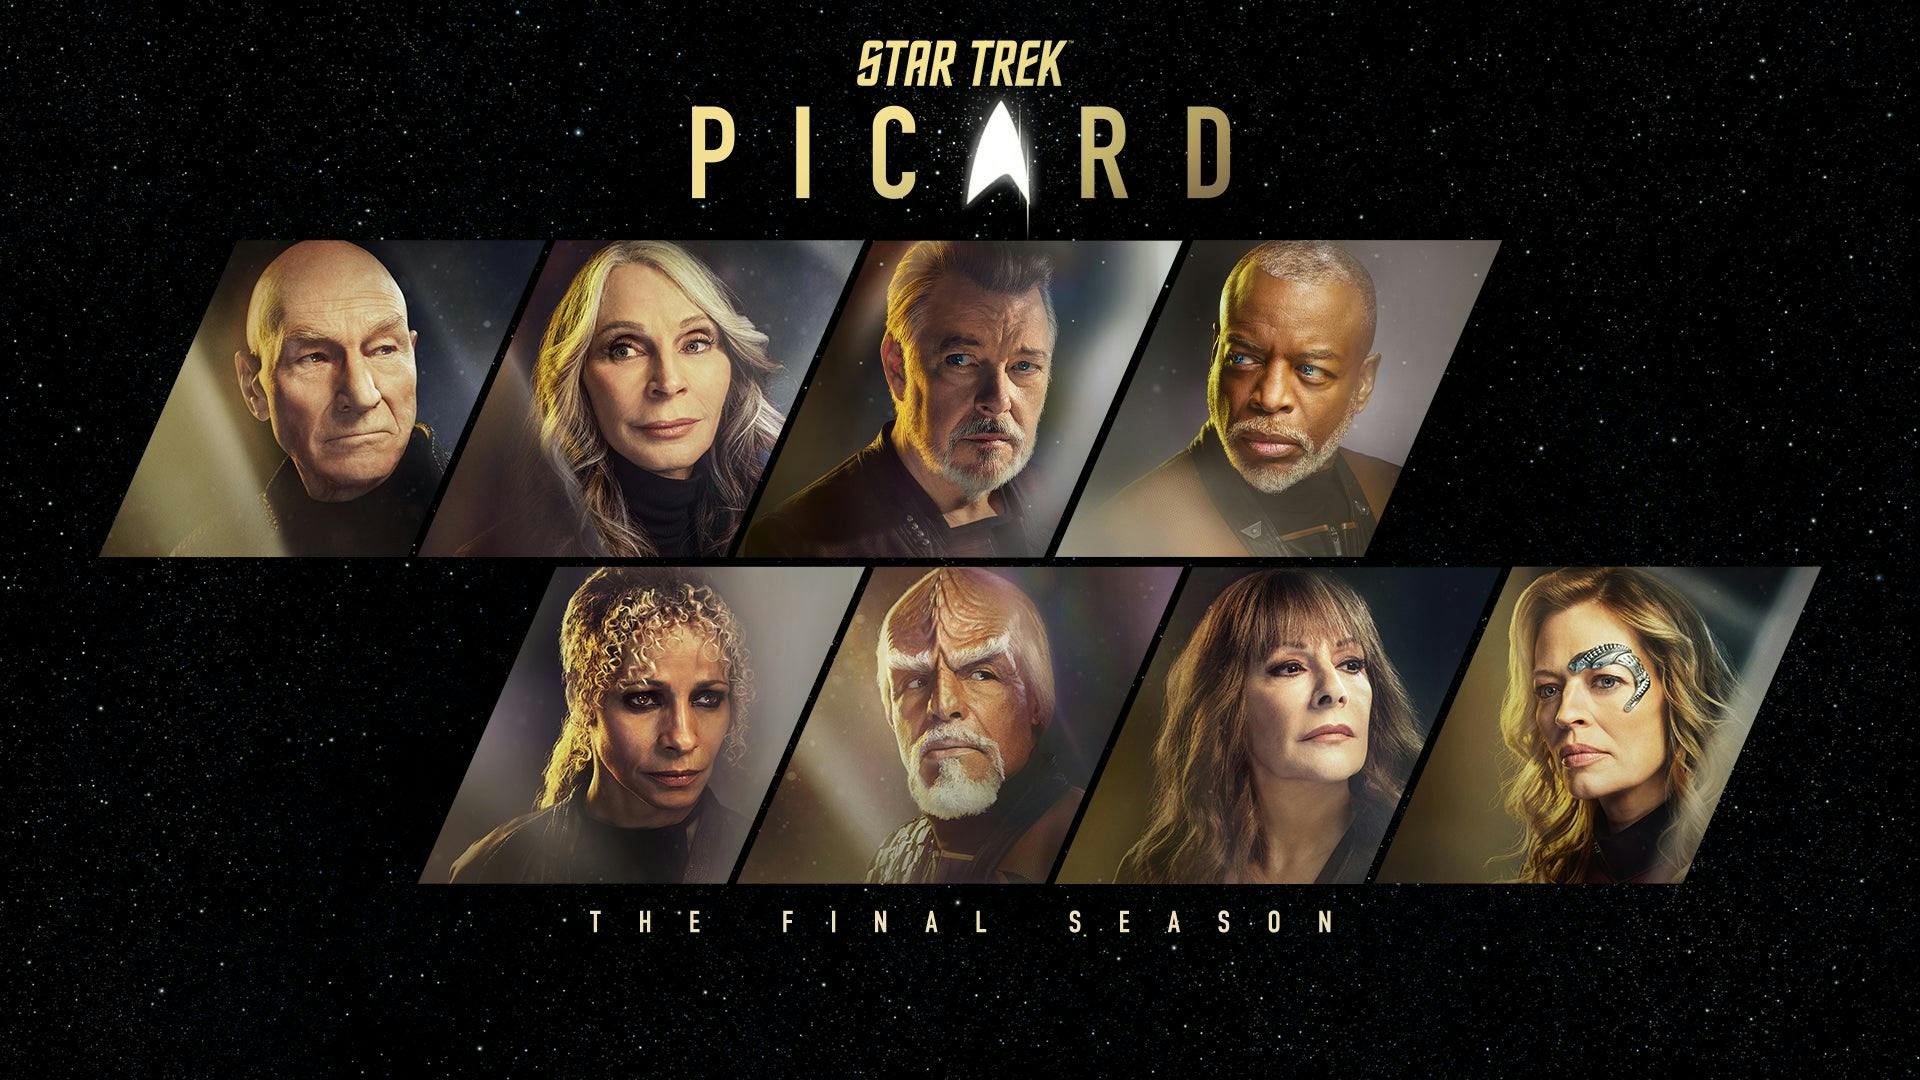 Character portraits for season three of Star Trek: Picard